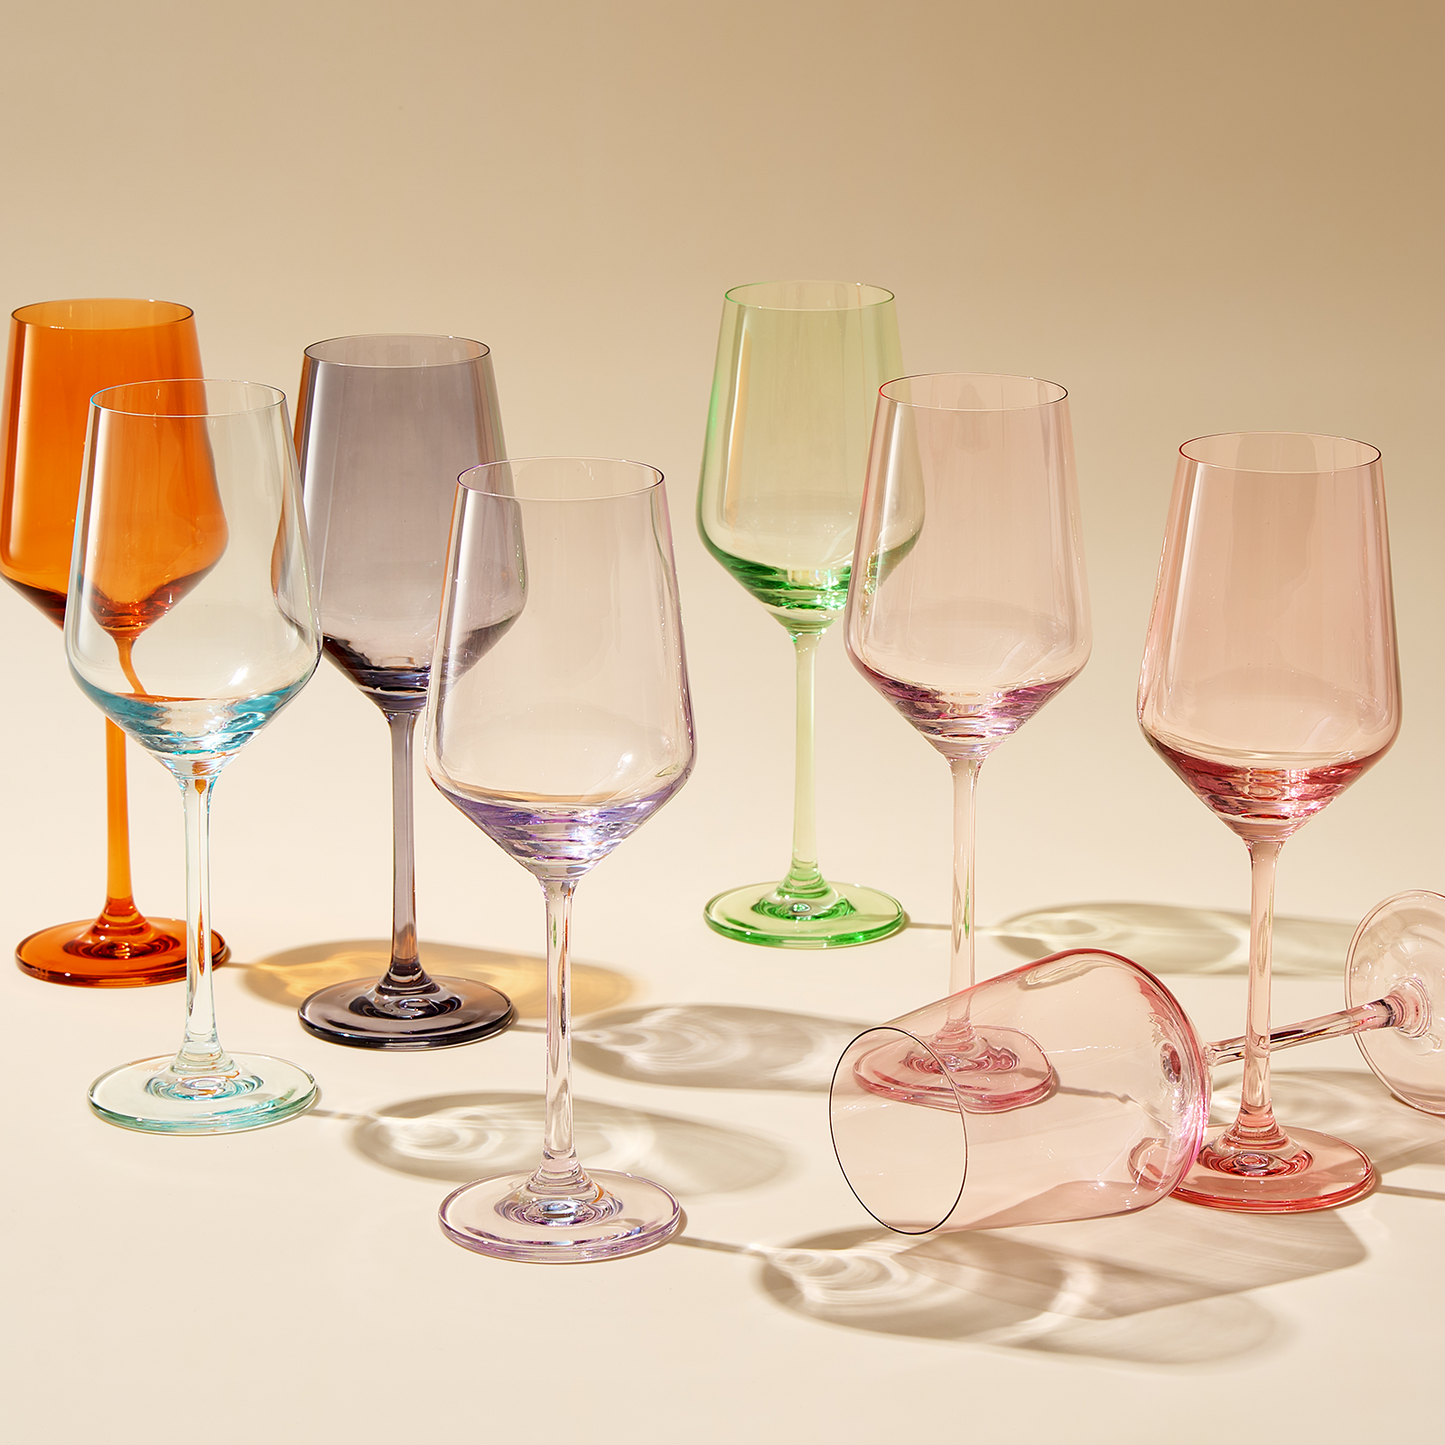 Rhea Wine Glassware, Set of 6, Rose